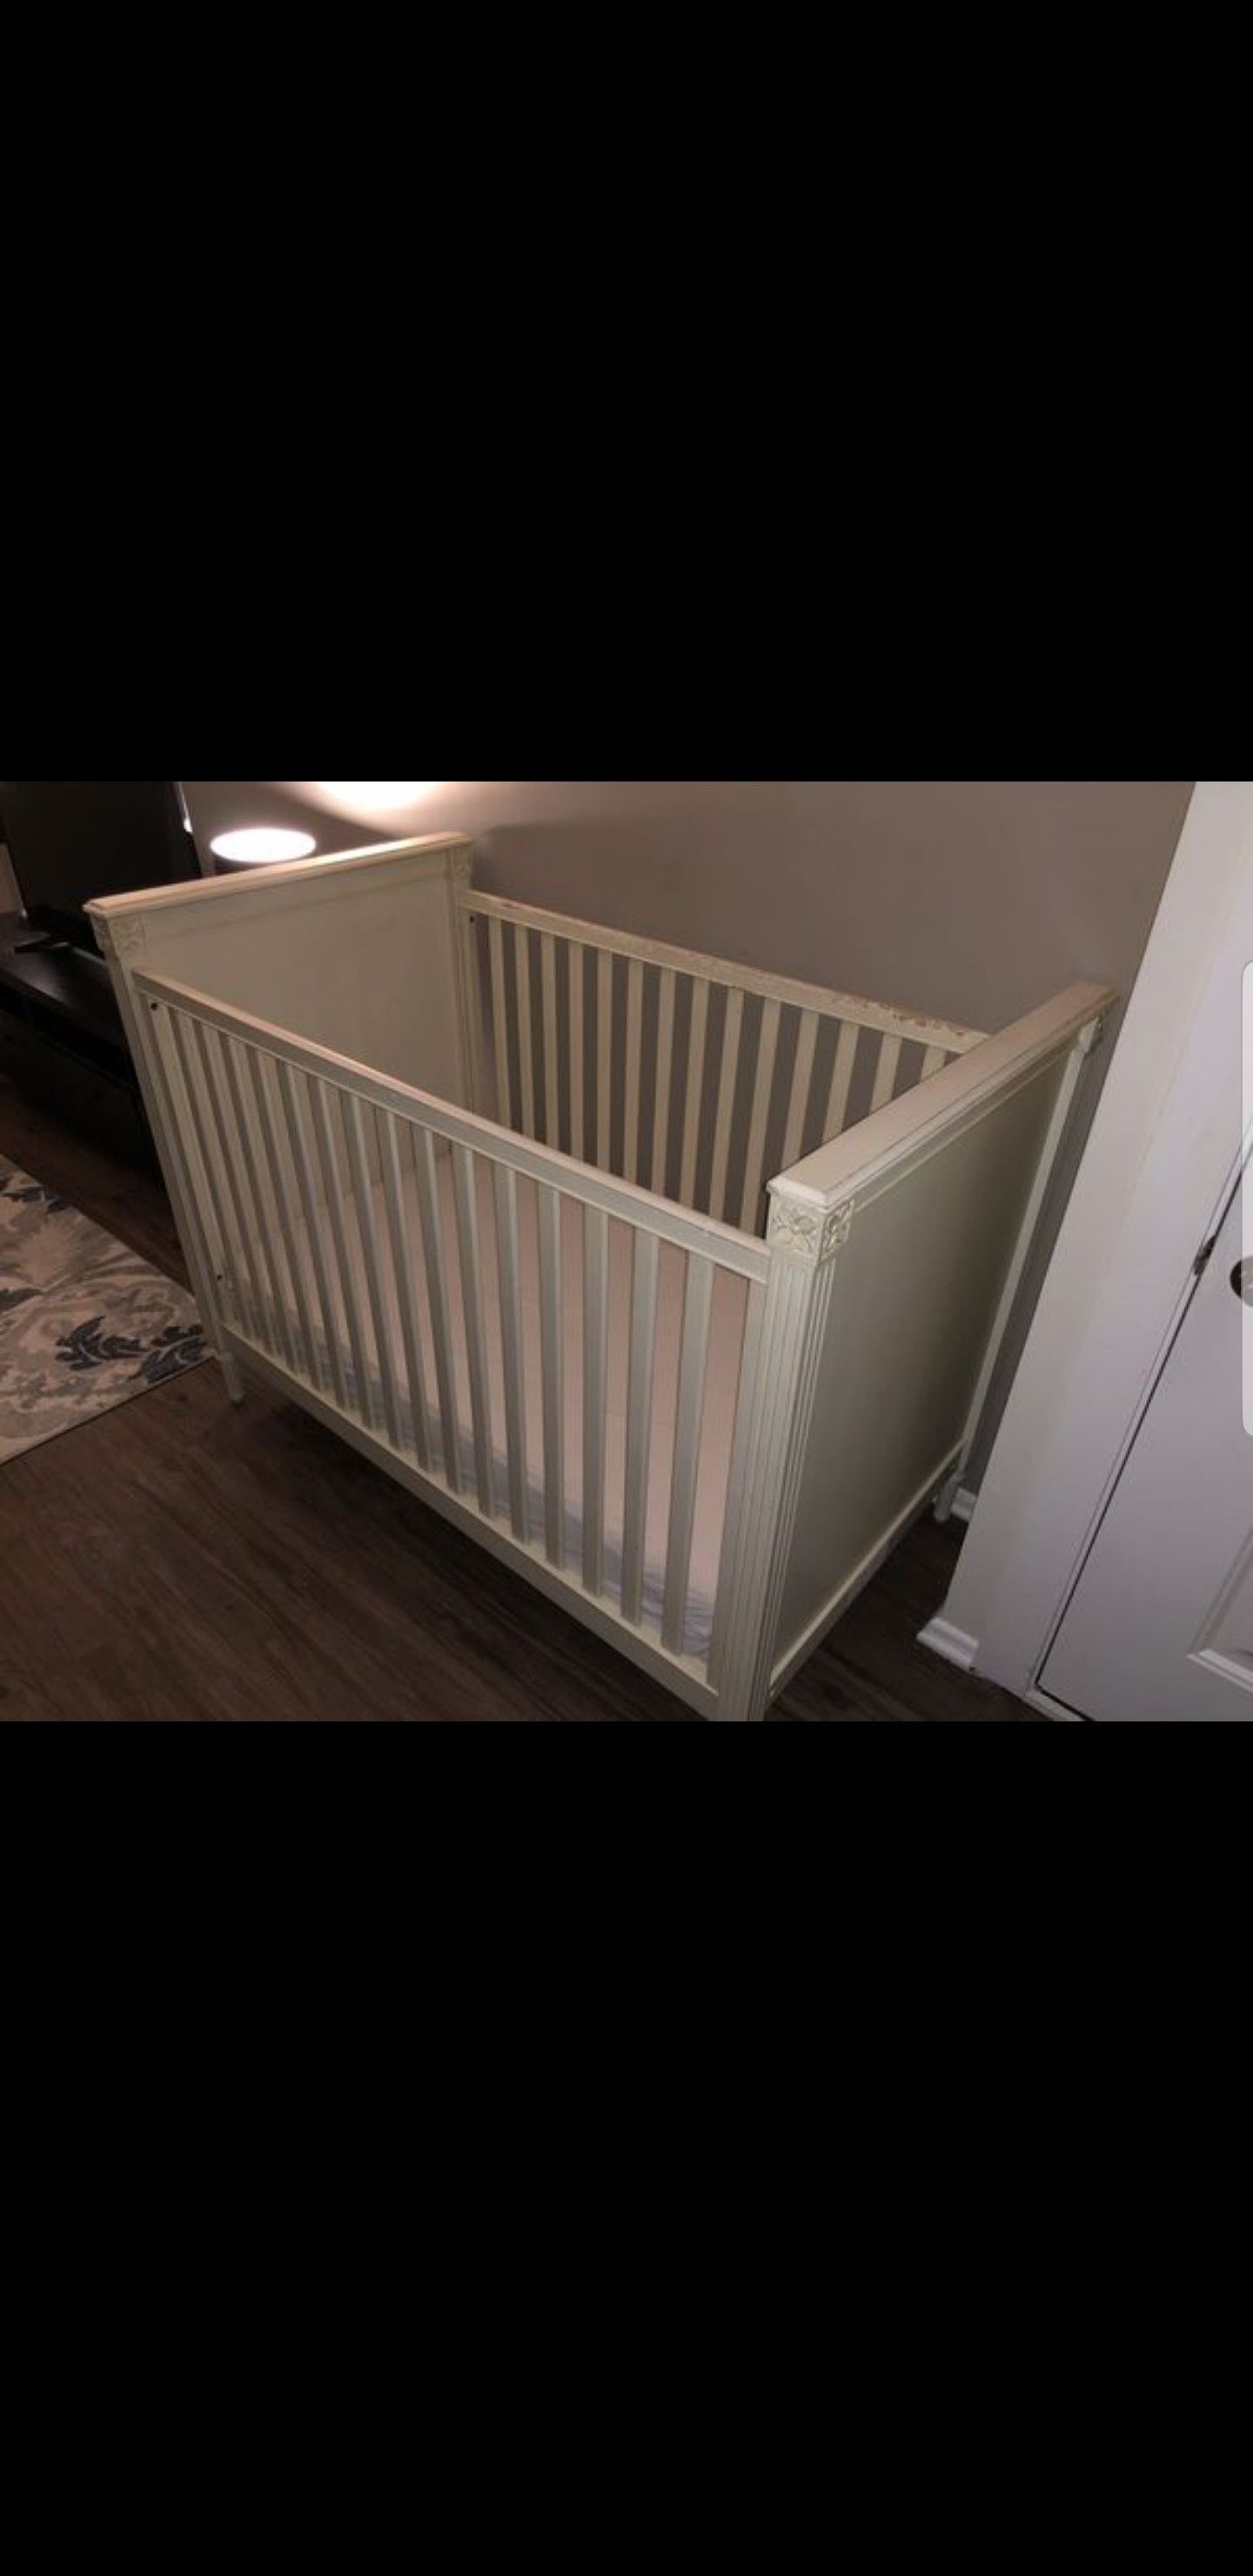 Panel crib with mattress